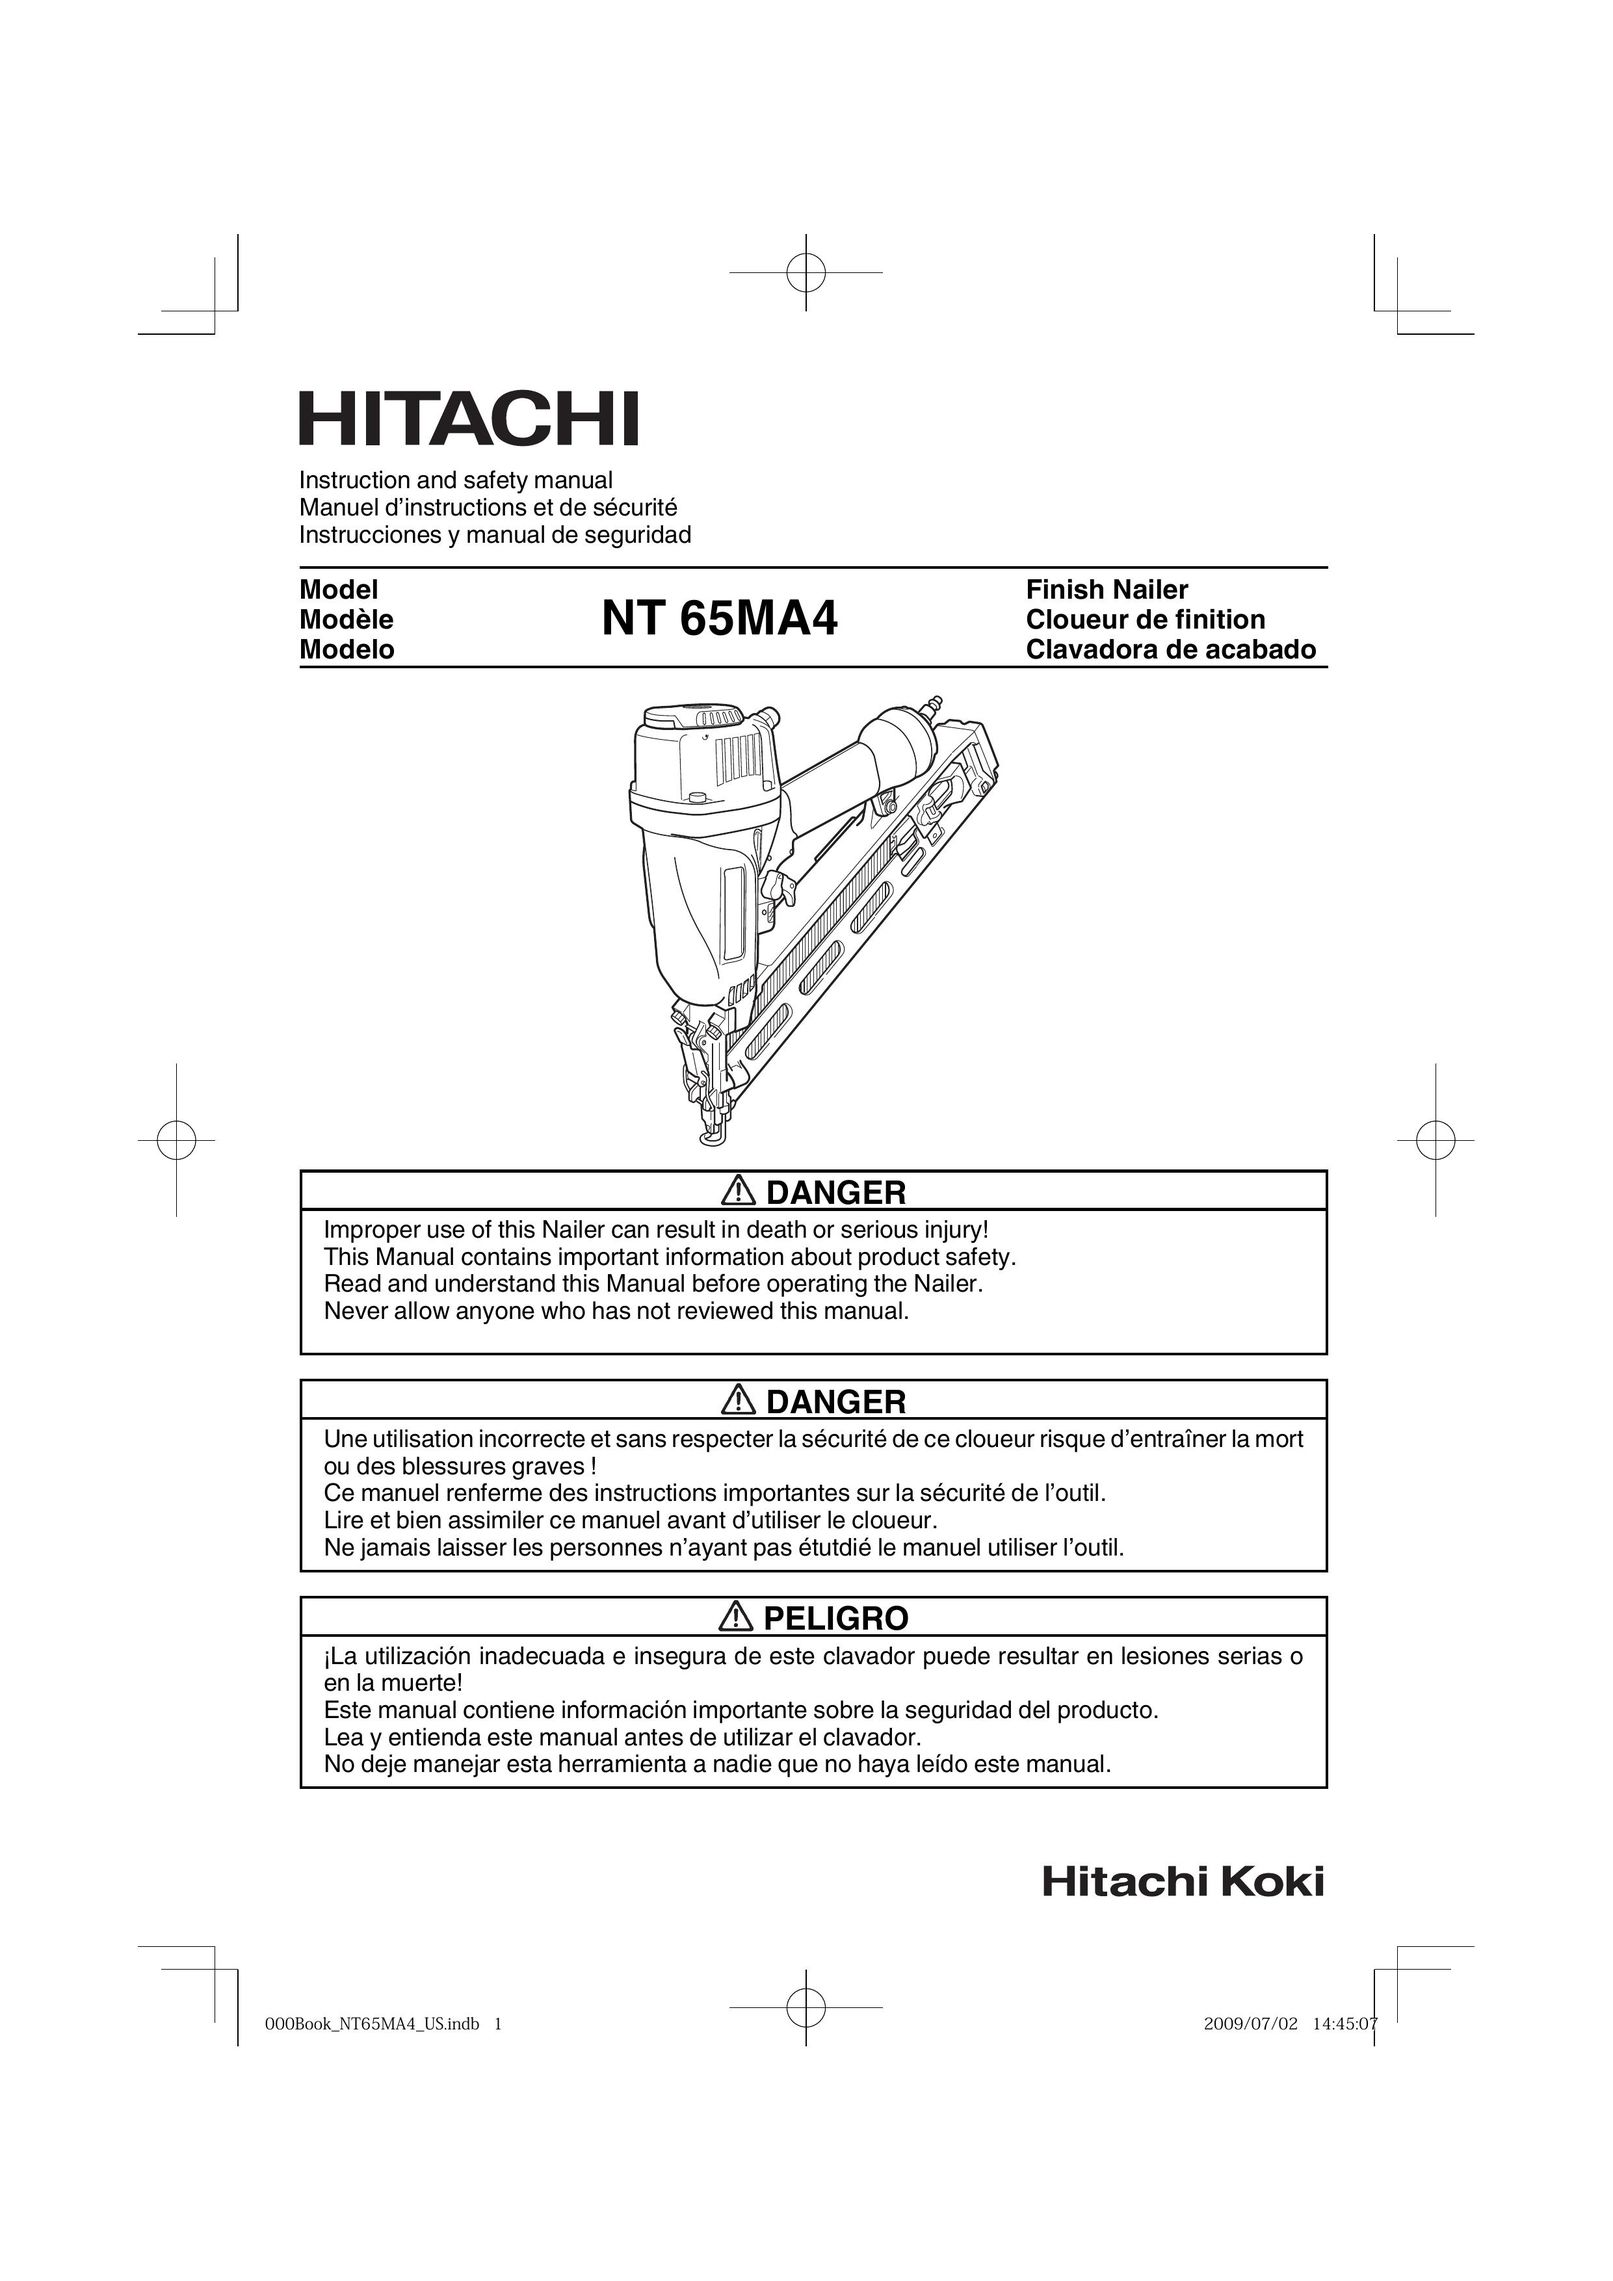 Hitachi NT 65MA4 Nail Gun User Manual